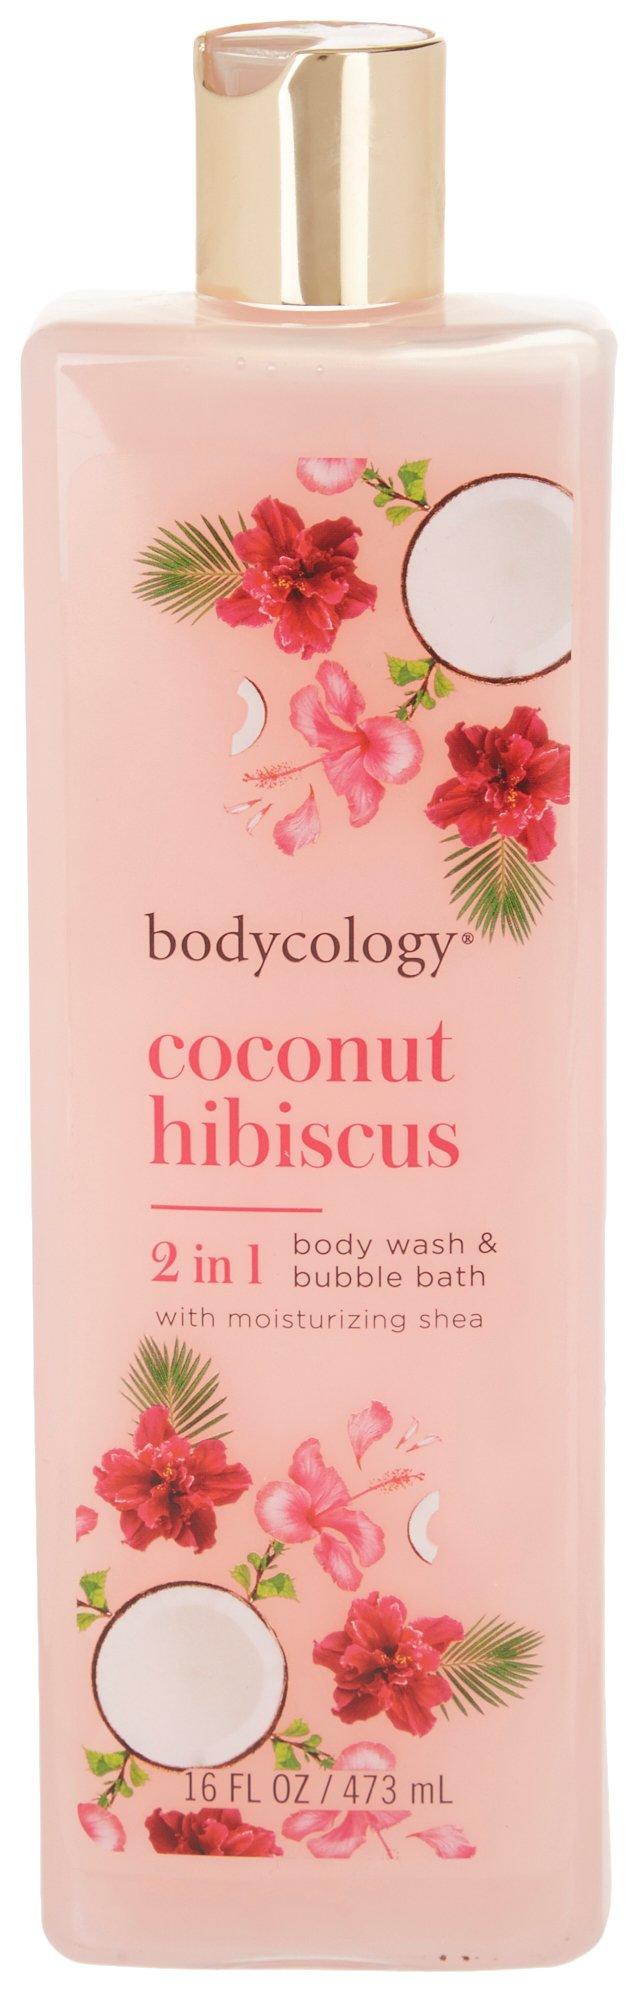 Bodycology Coconut Hibiscus Body Wash & Bubble Bath 16 oz.